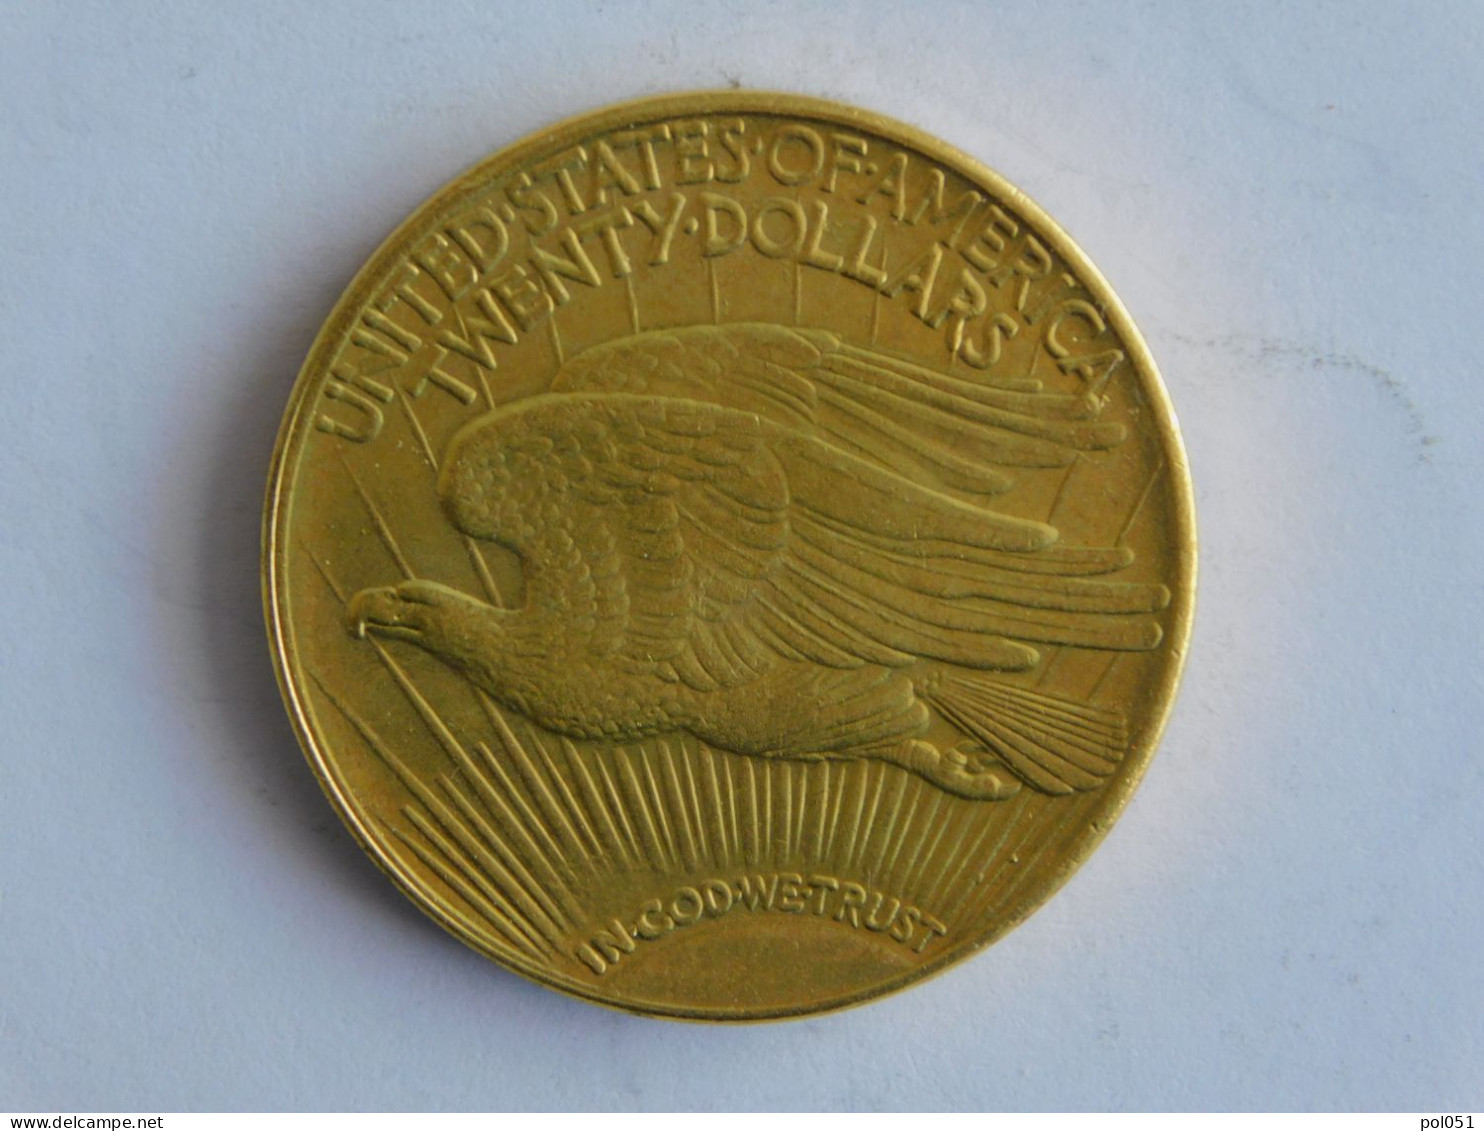 USA 20 TWENTY DOLLAR 1933 OR GOLD Dollars Copie Copy - 20$ - Double Eagle - 1907-1933: Saint-Gaudens